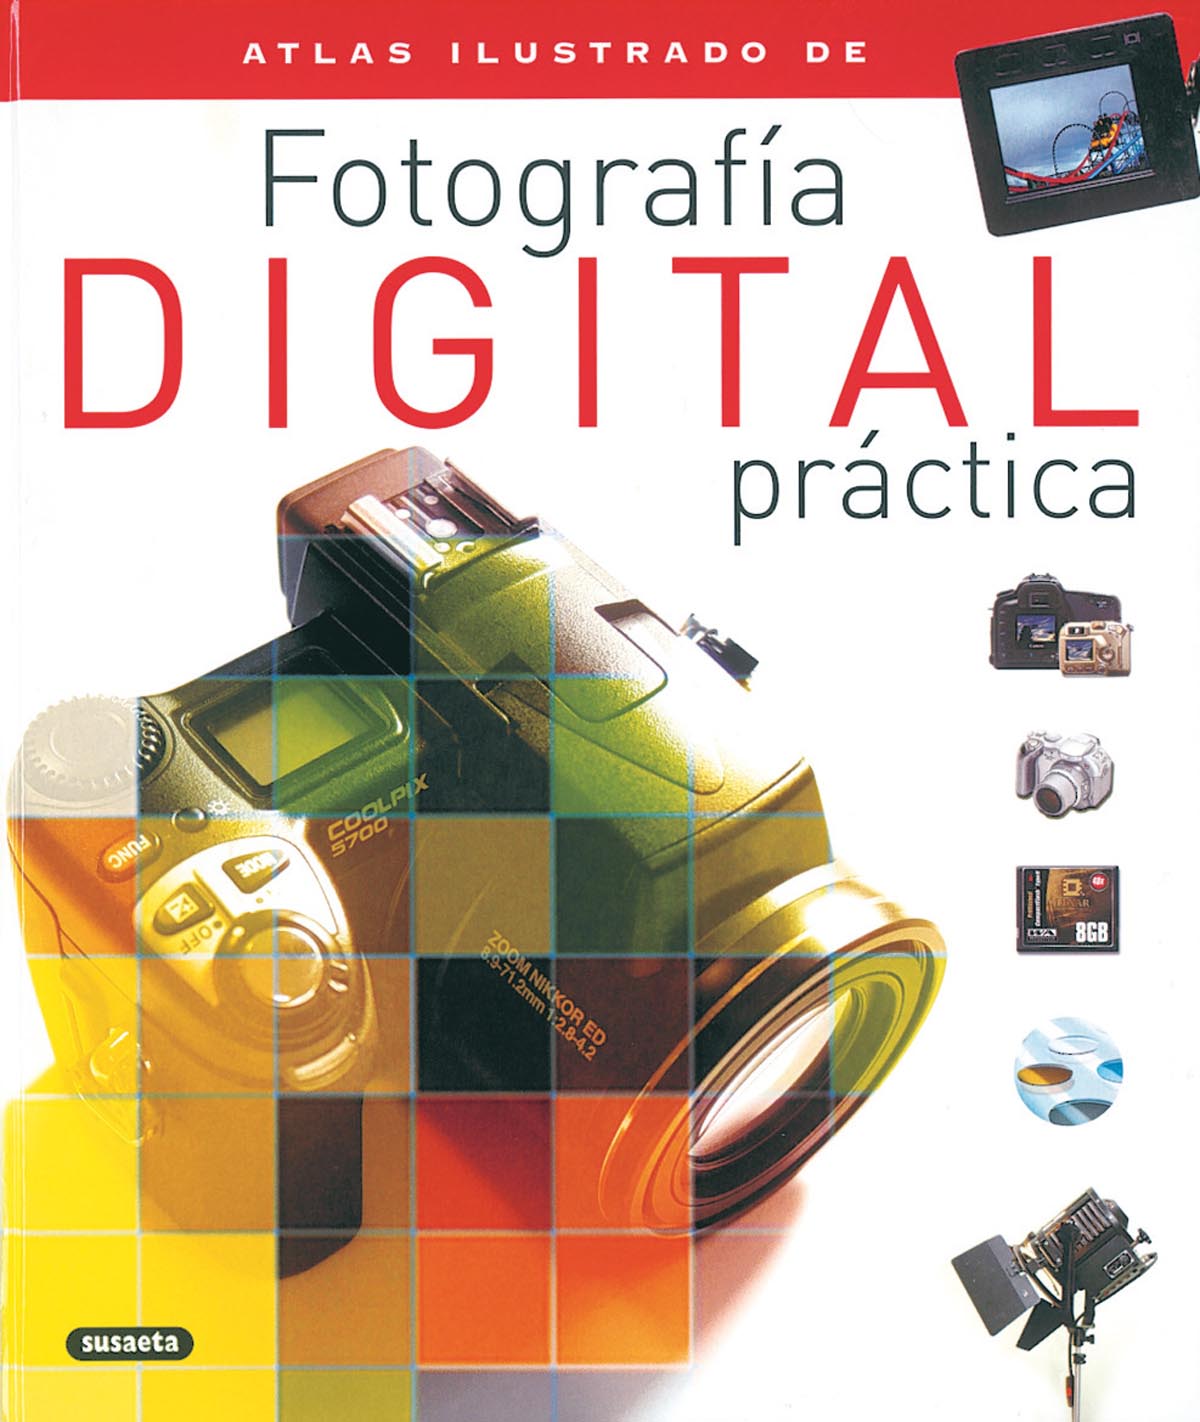 Fotografa digital prctica